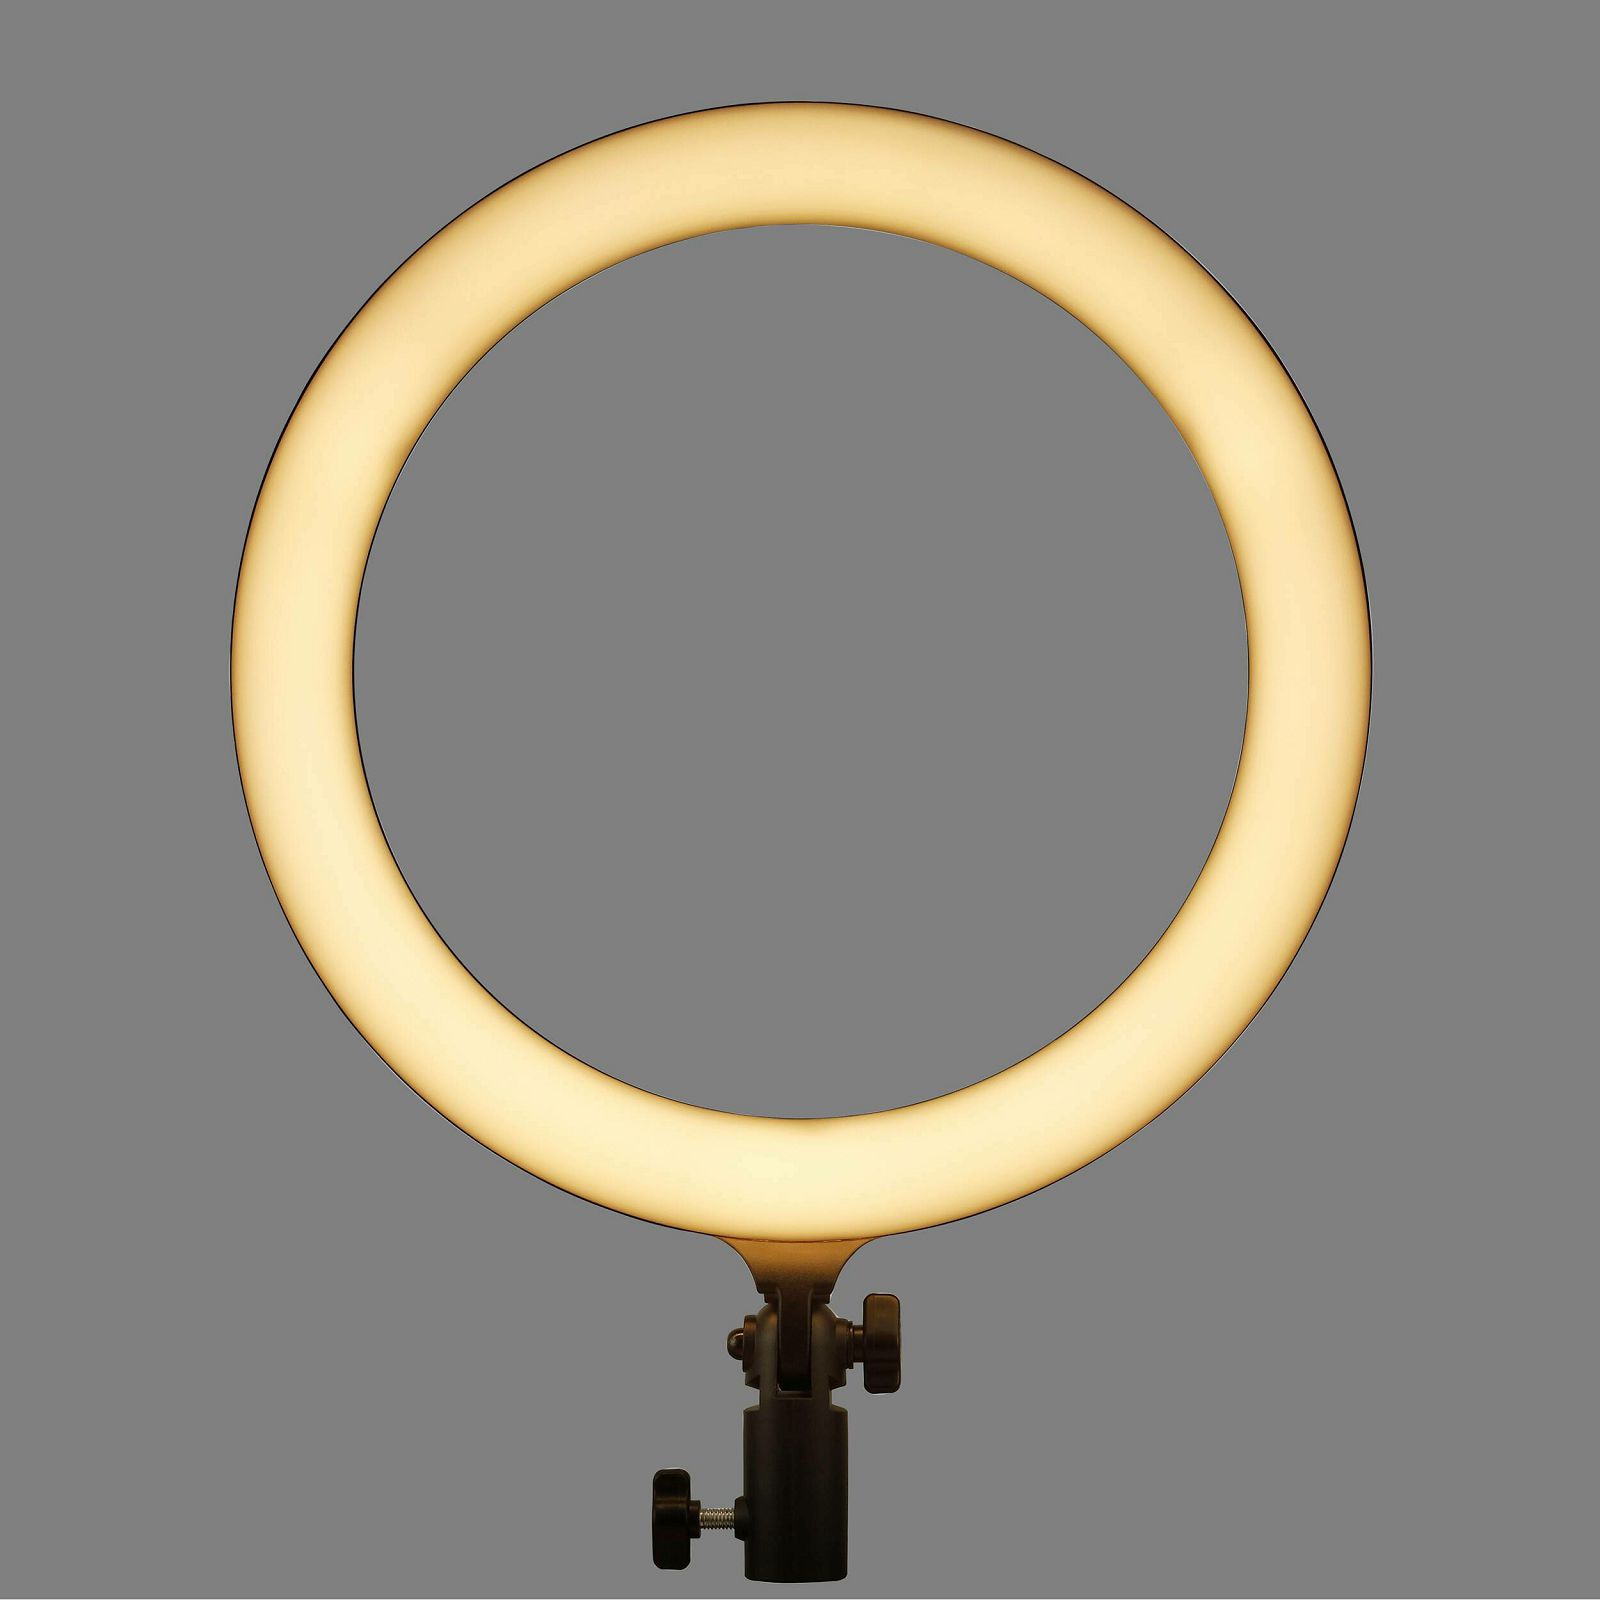 Godox LR-120B LED Ring Light kružna rasvjeta